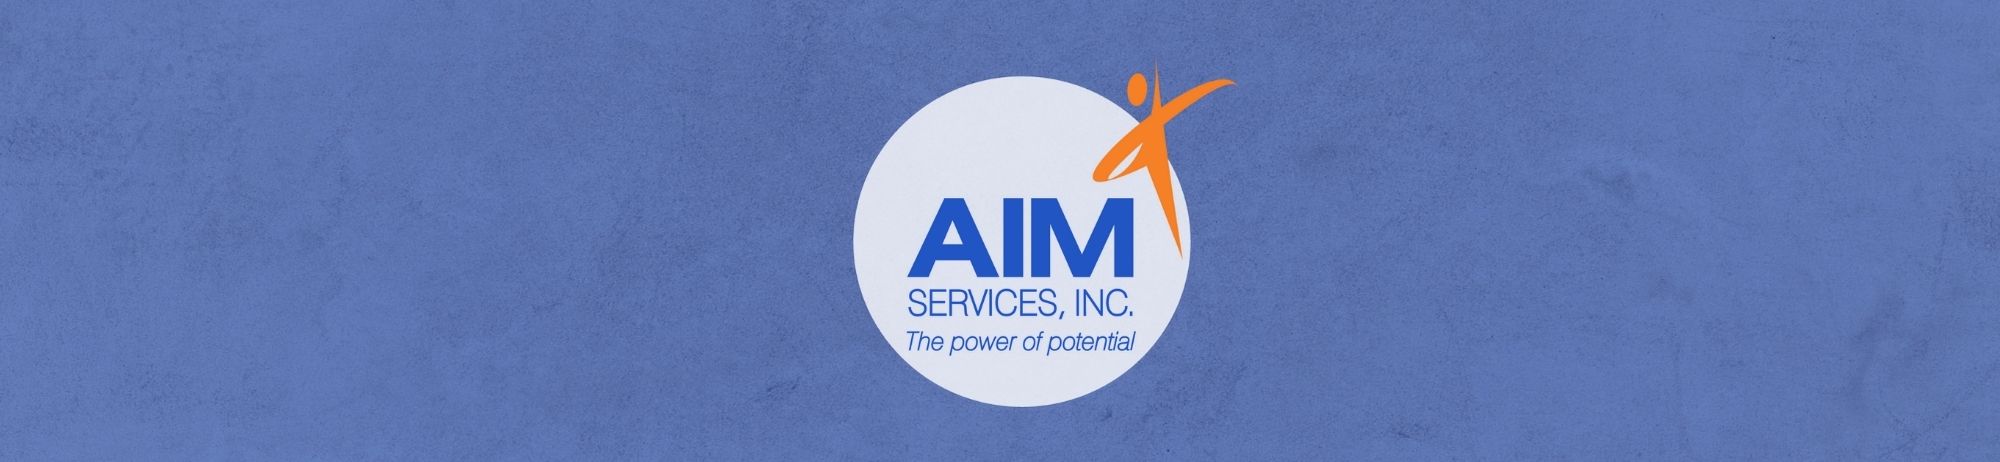 Website banner general AIM logo